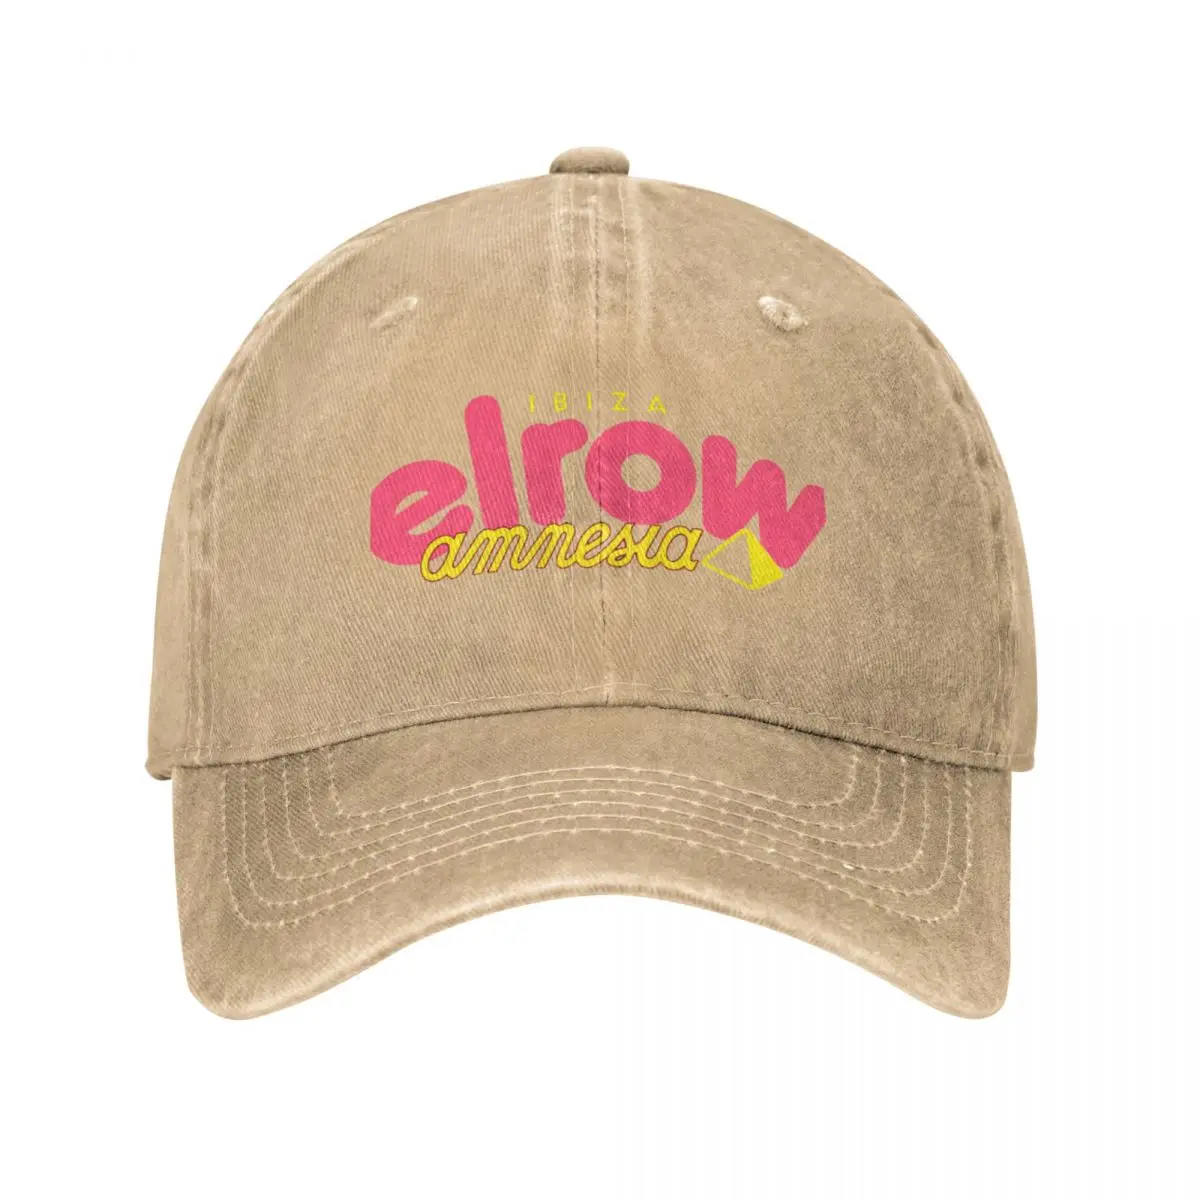 

Elrow Ibiza Amnesia design for parties, festivals, events and clubs Cowboy Hat Christmas hats Women's cap Men's